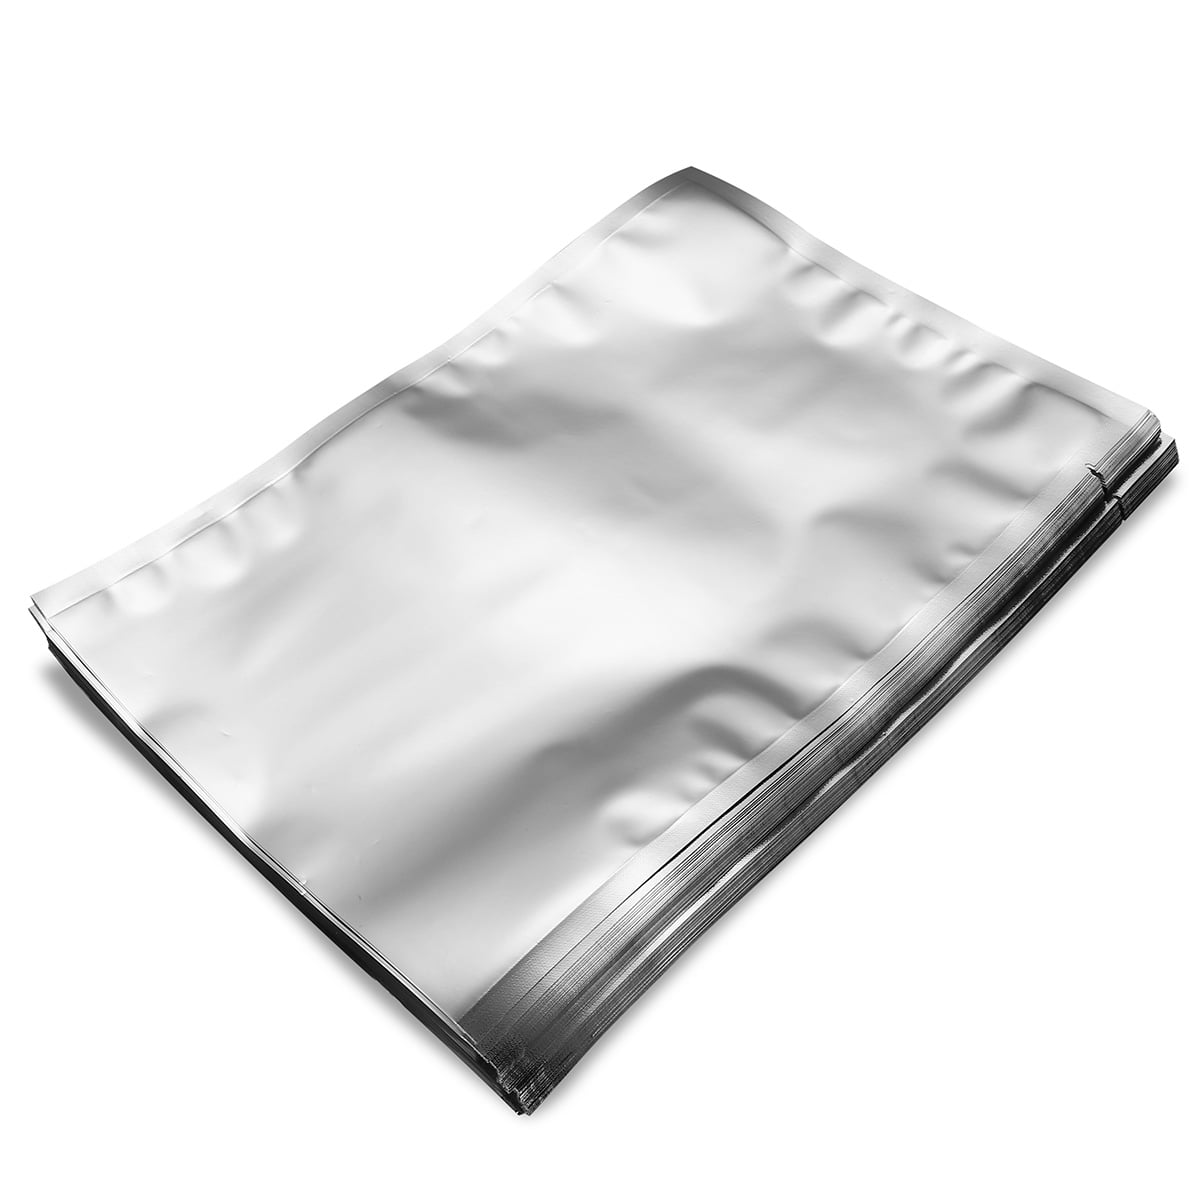 100pcs Silver Aluminum Foil Mylar Bag Vacuum Bag Sealer Food Storage Package 100